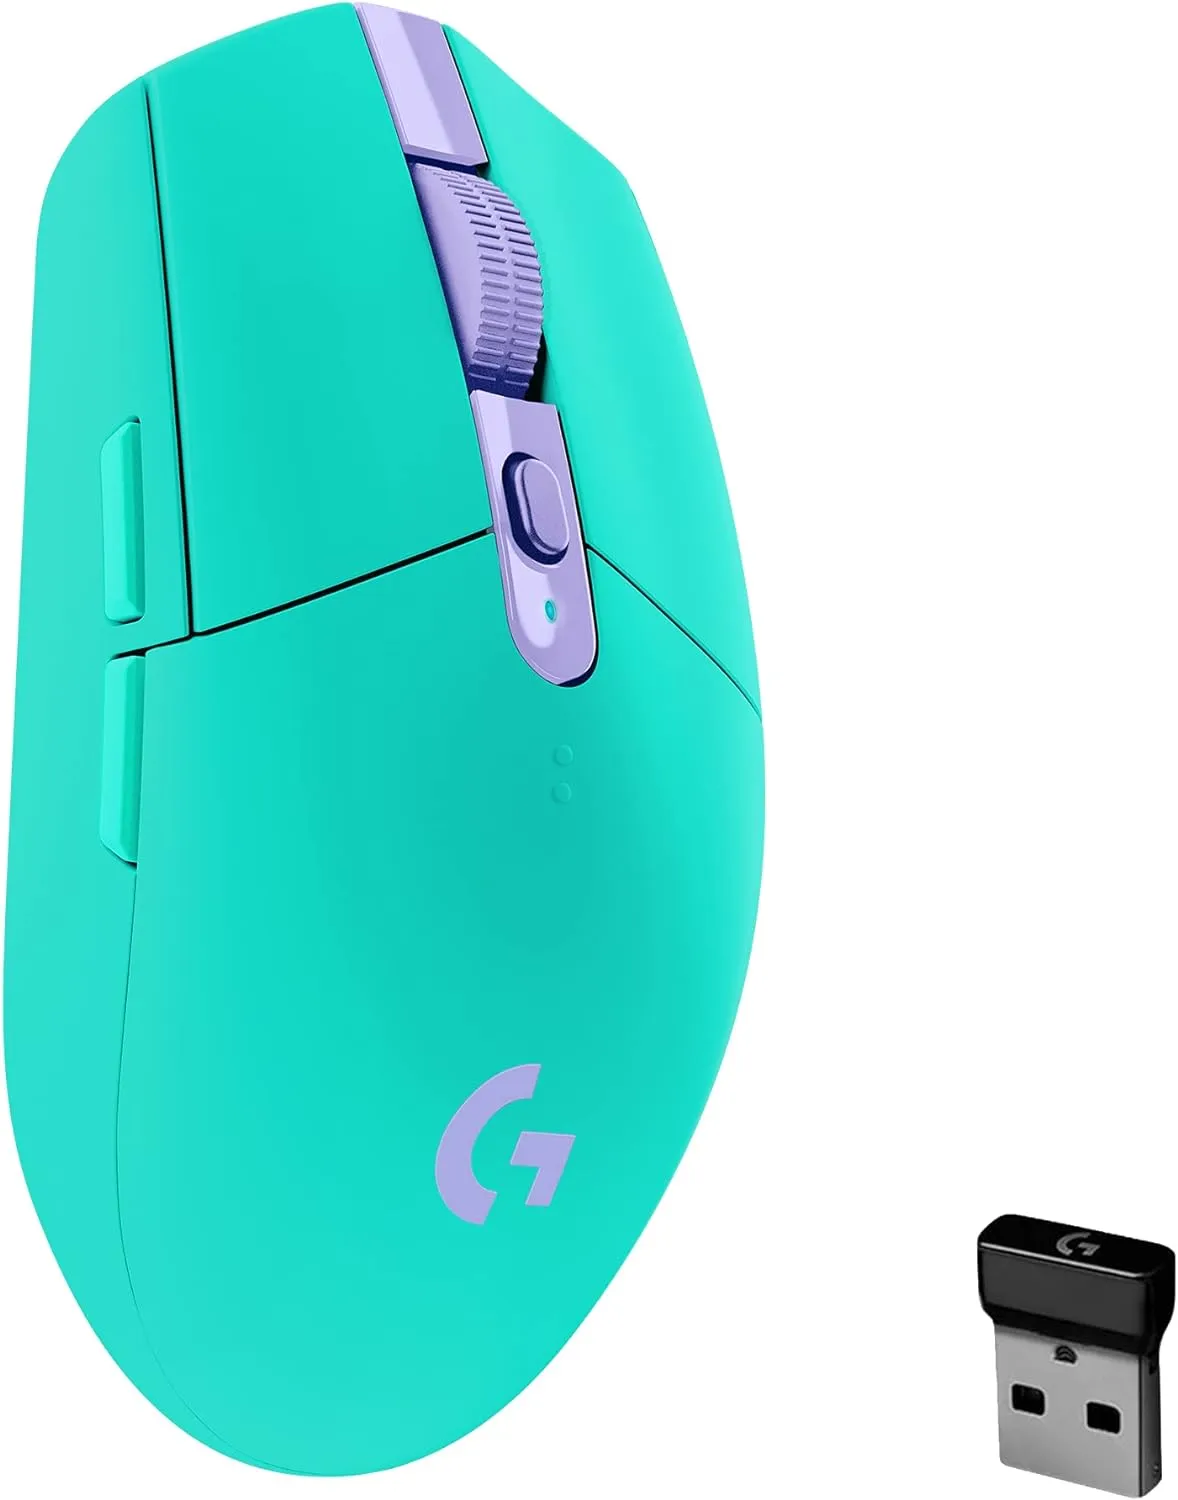 Logitech G305 LightSpeedワイヤレスゲーミングマウス